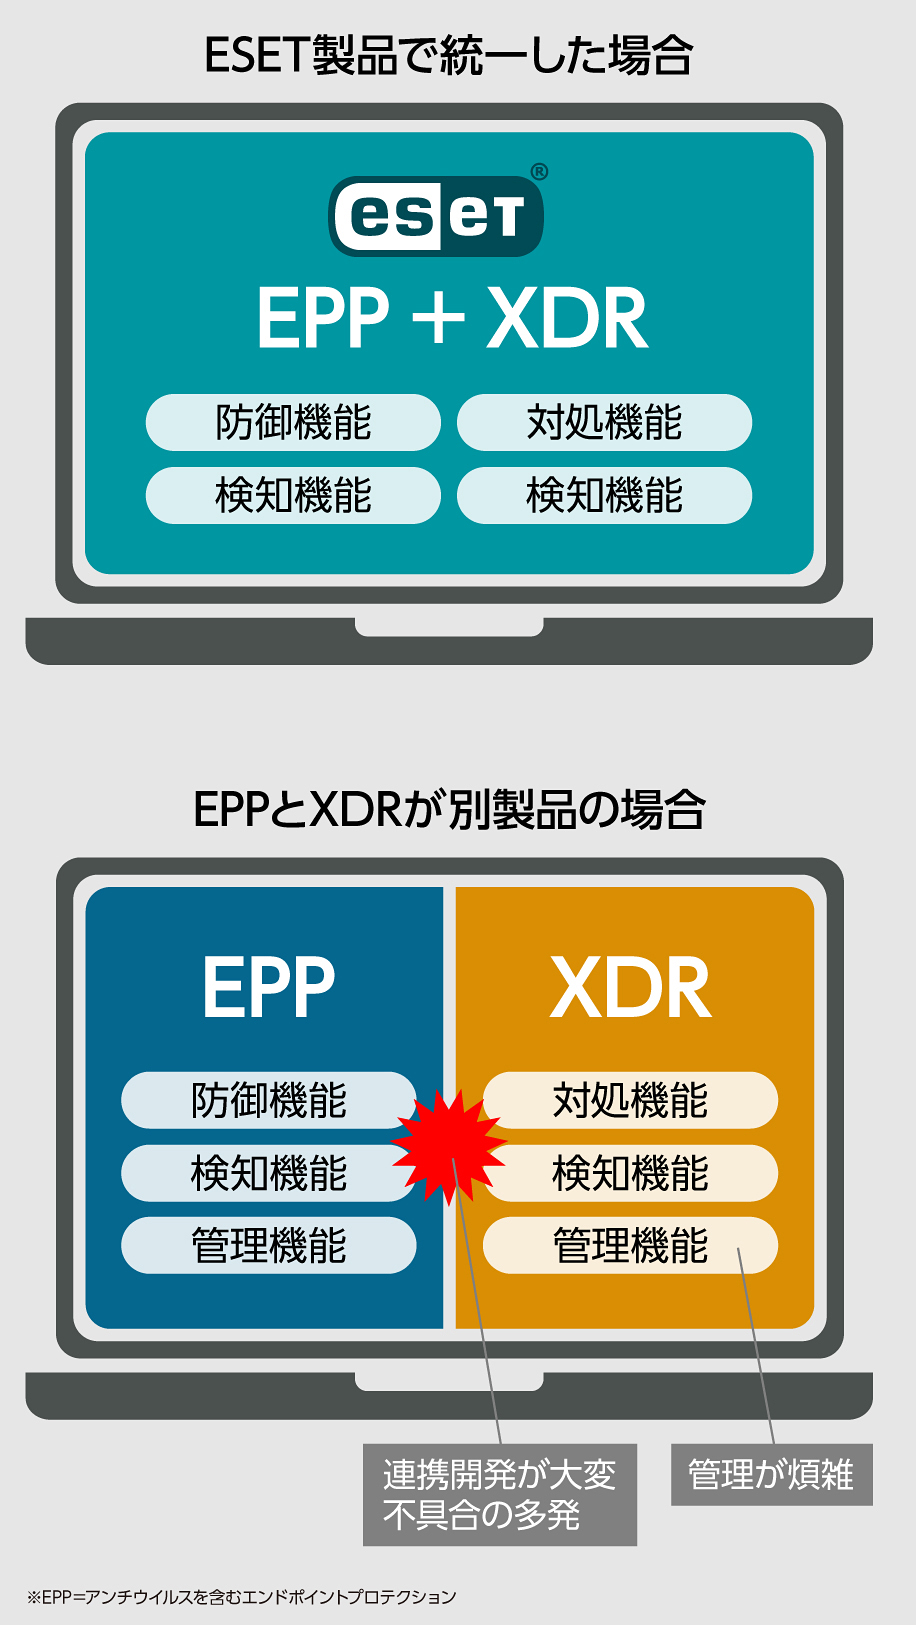 ESET製品で統一した場合とEPPとXDRが別製品の場合の比較